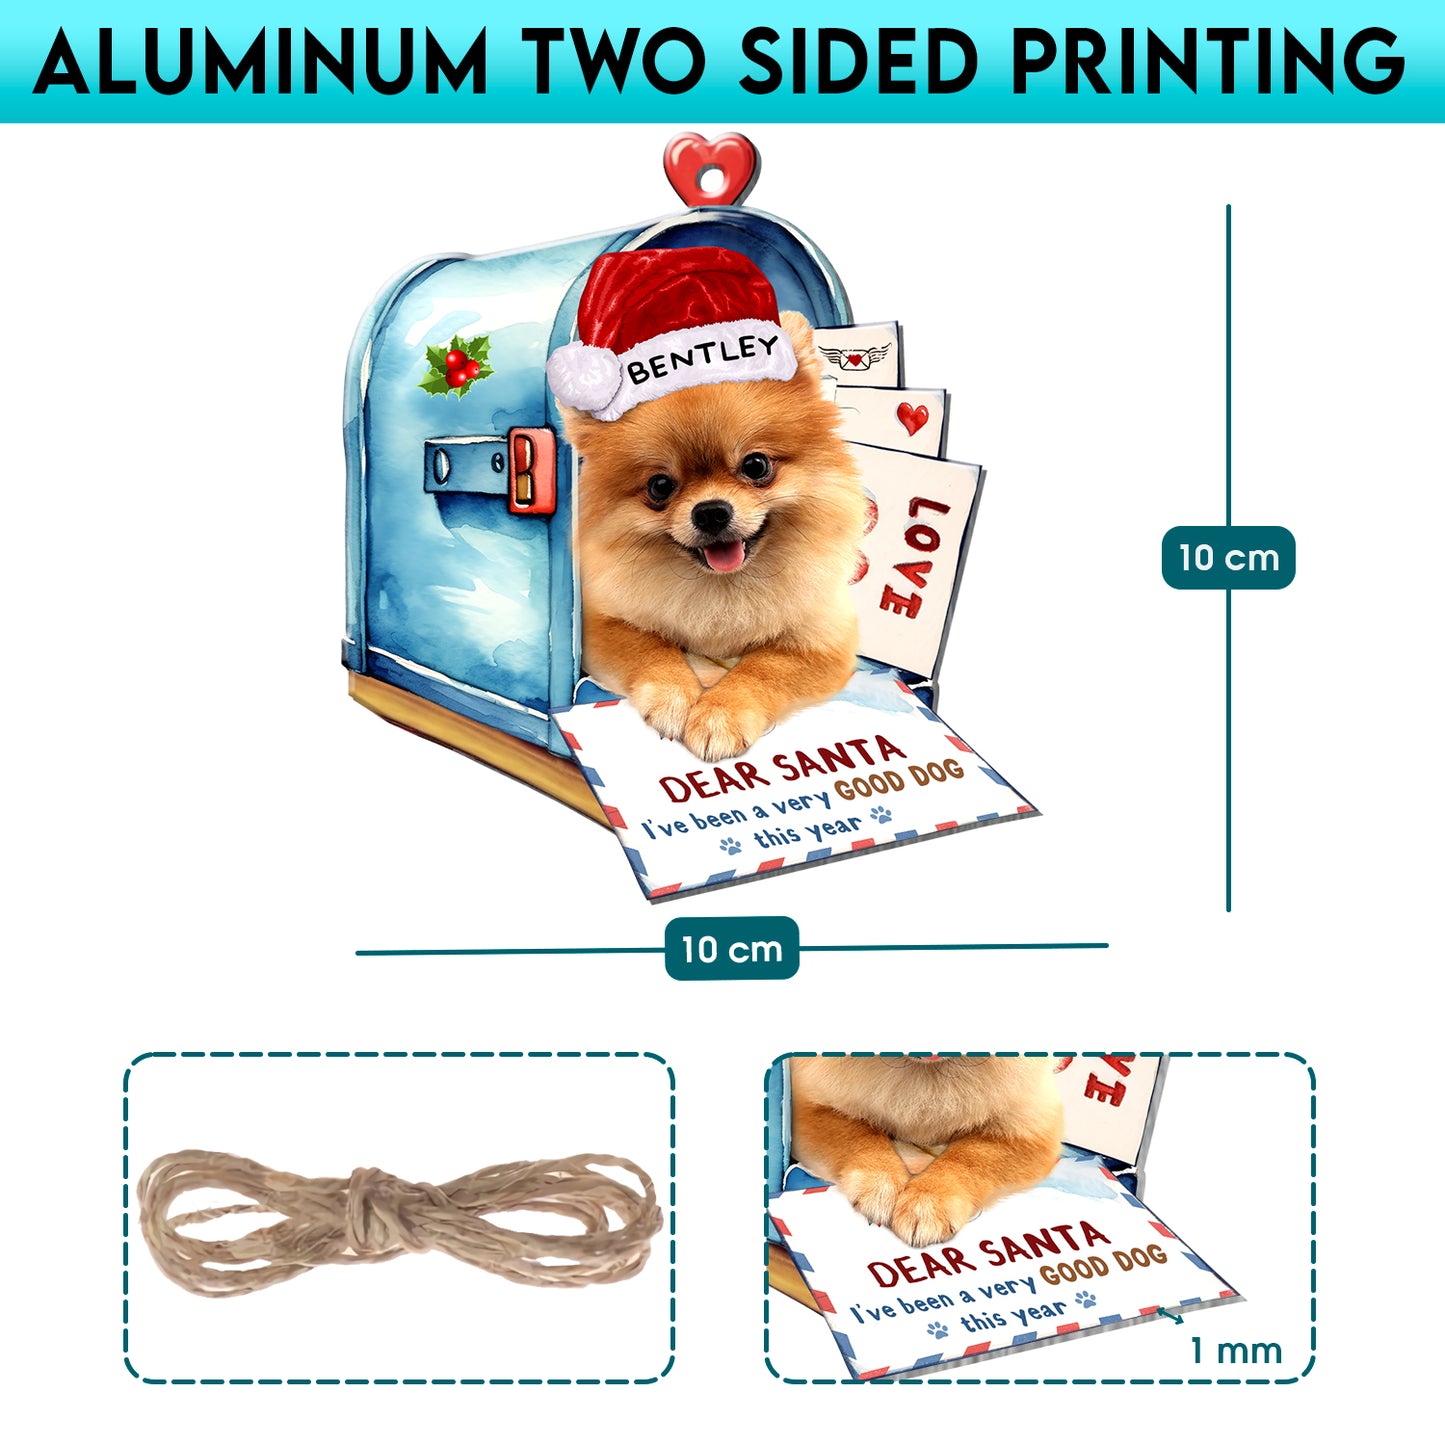 Personalized Pomeranian In Mailbox Christmas Aluminum Ornament